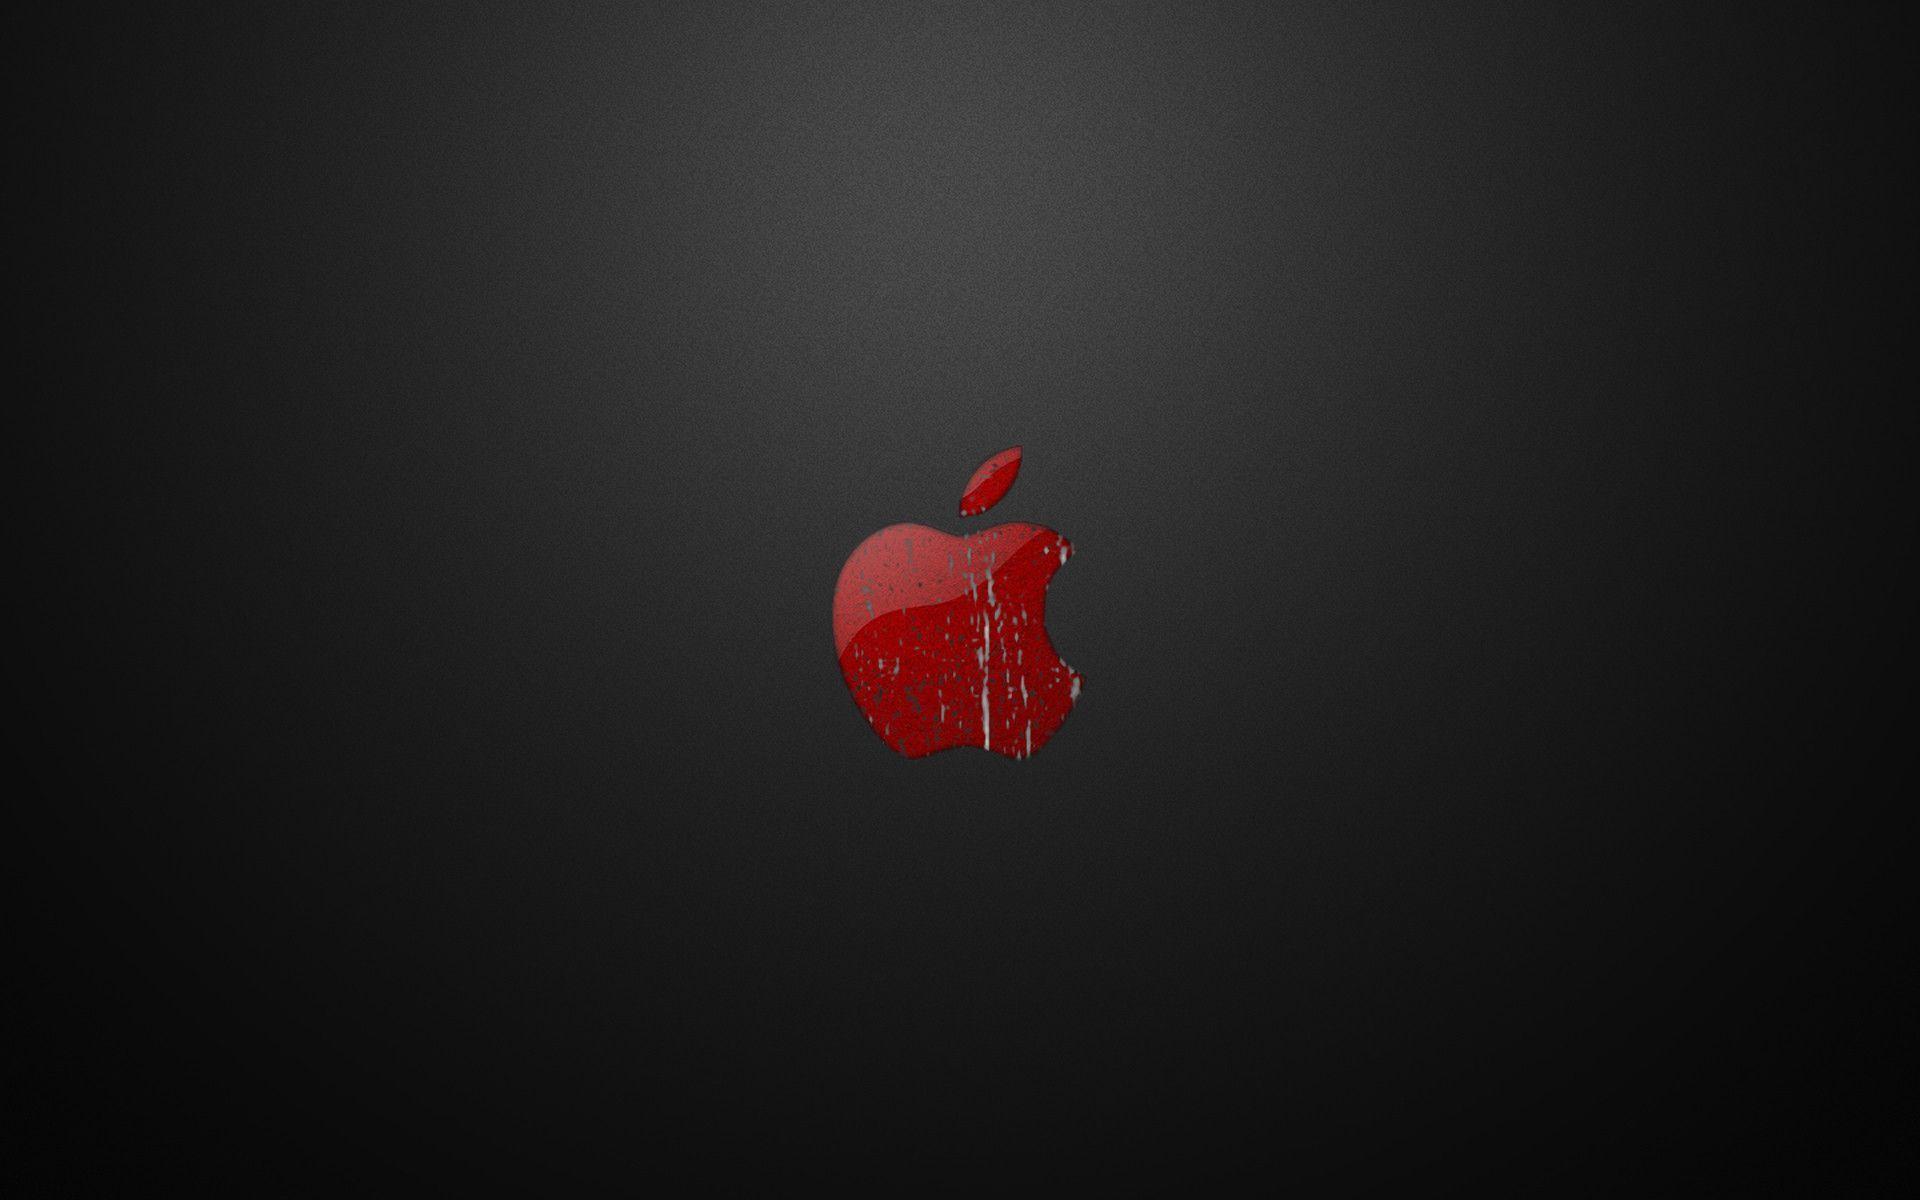 Red Apple system wallpaper Auto desktop background. Computer